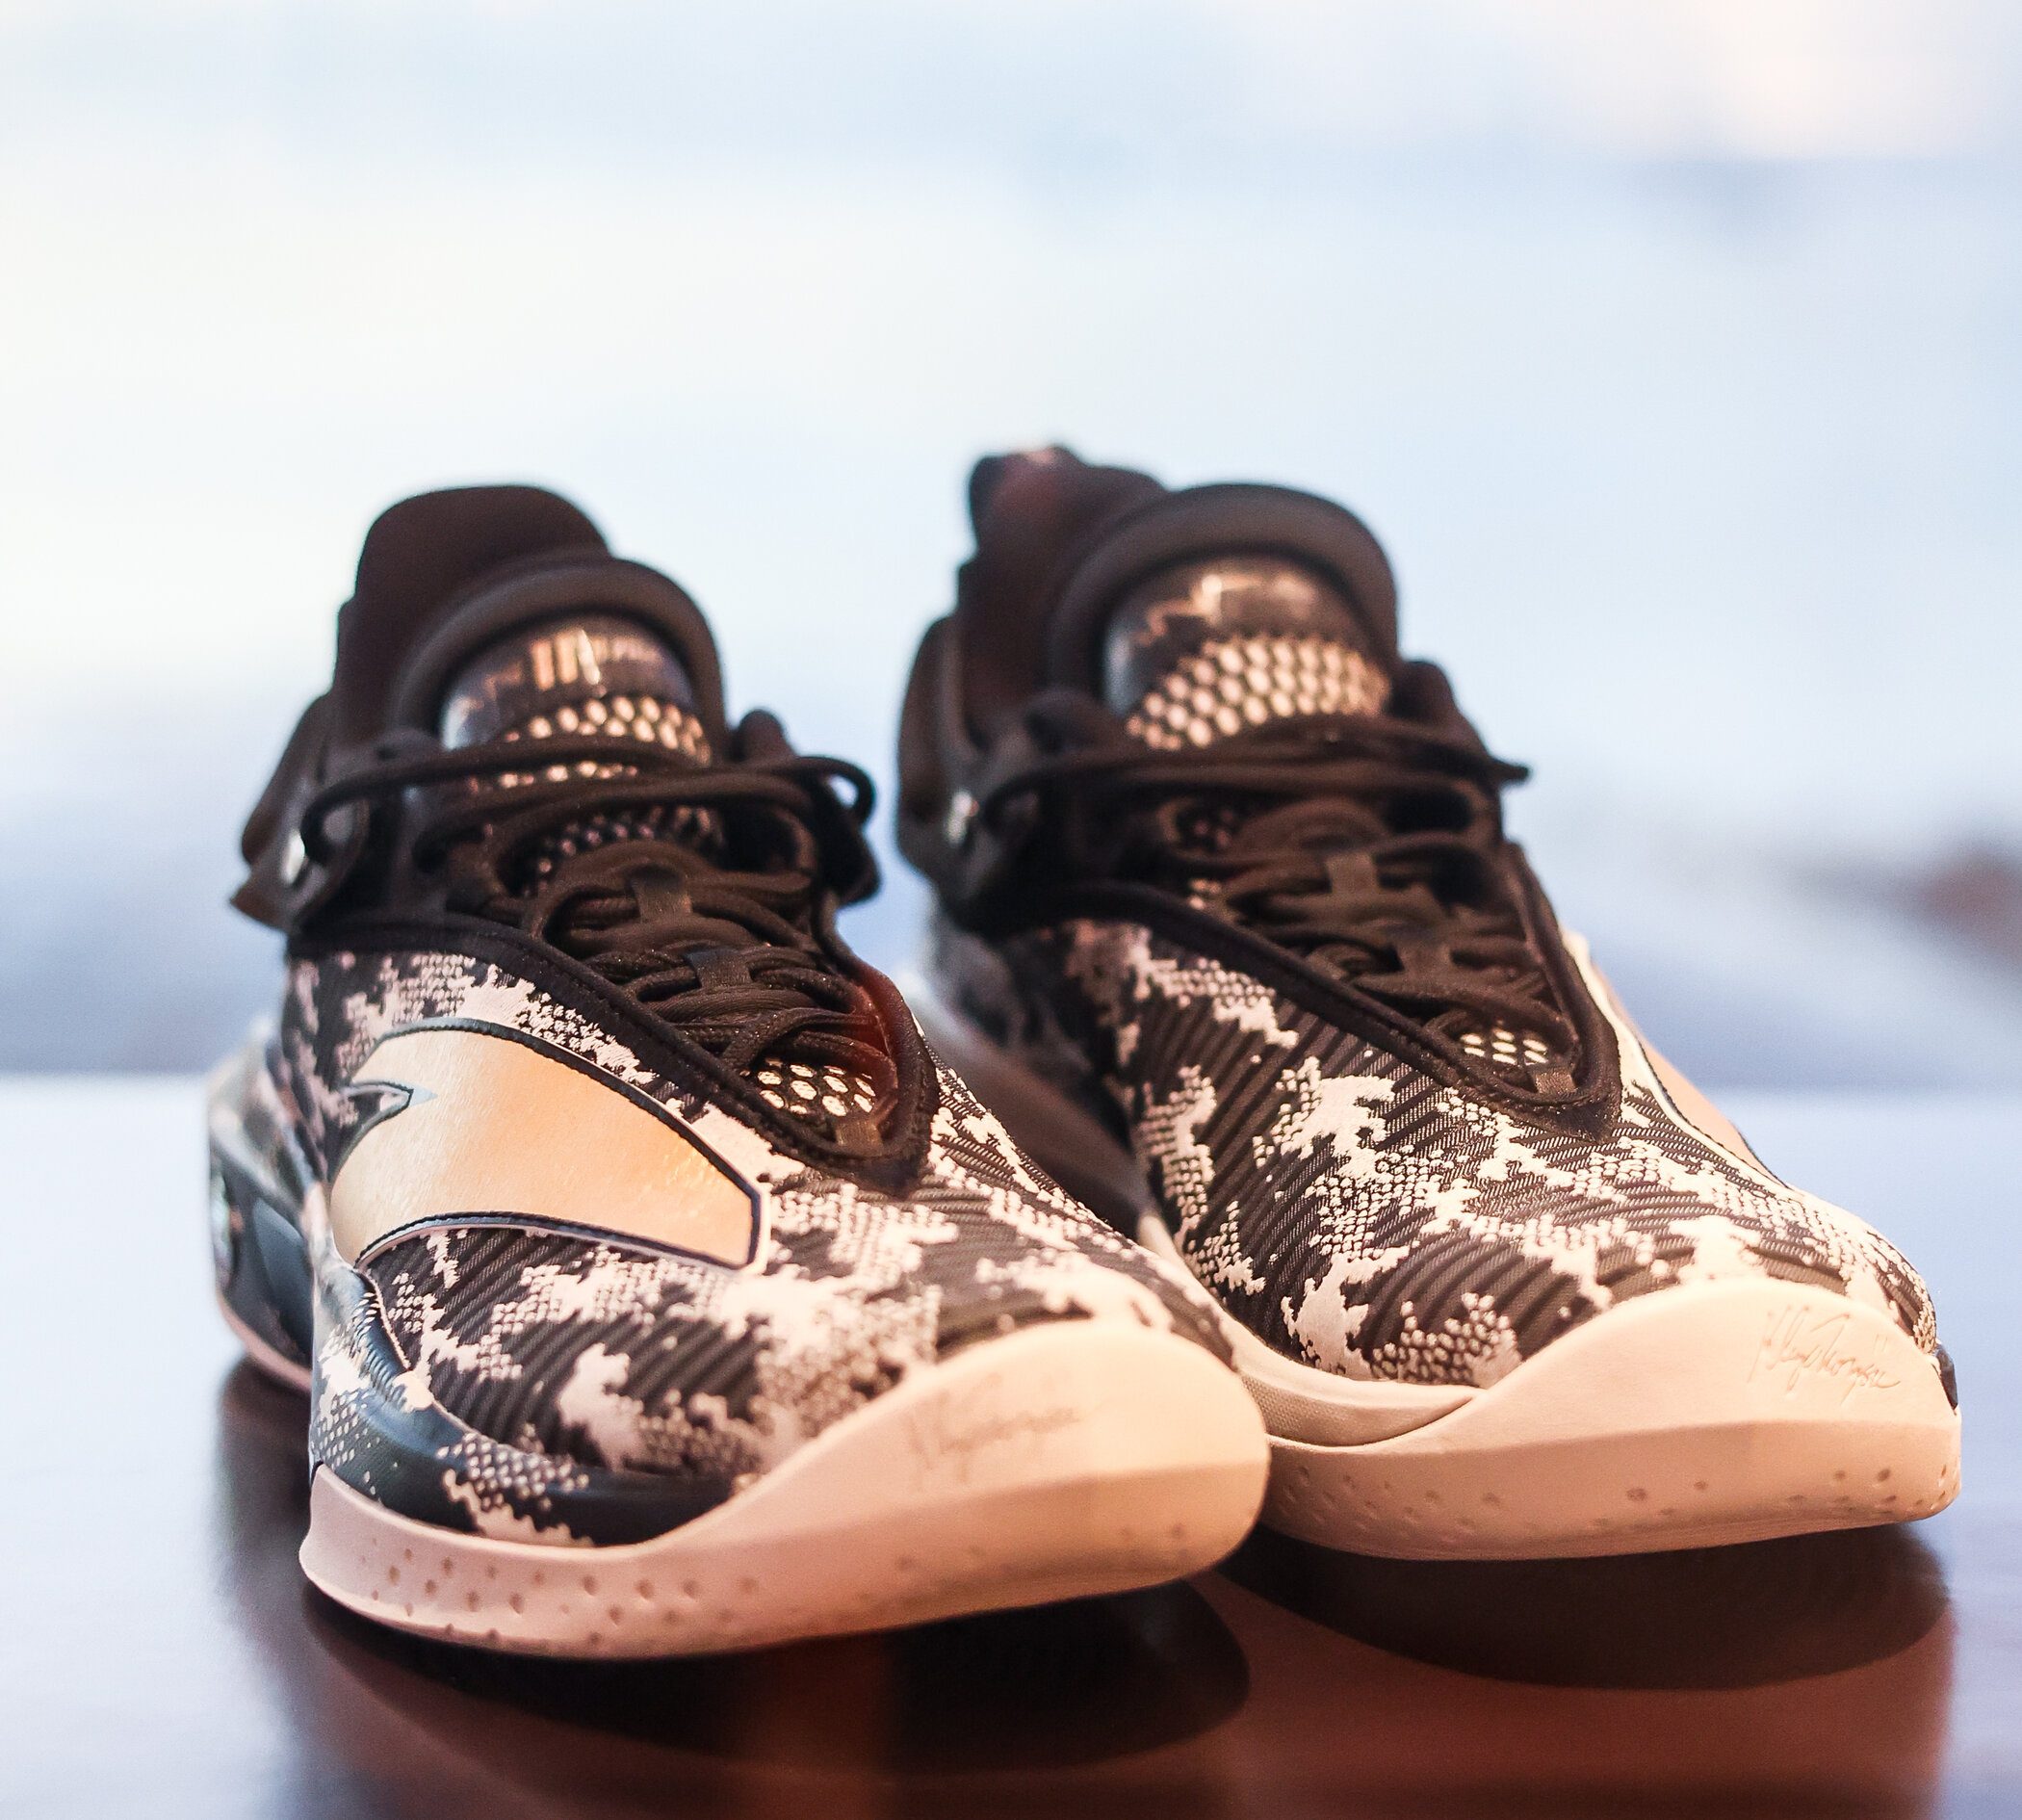 LOOK: ANTA PH launches new Klay Thompson signature shoe